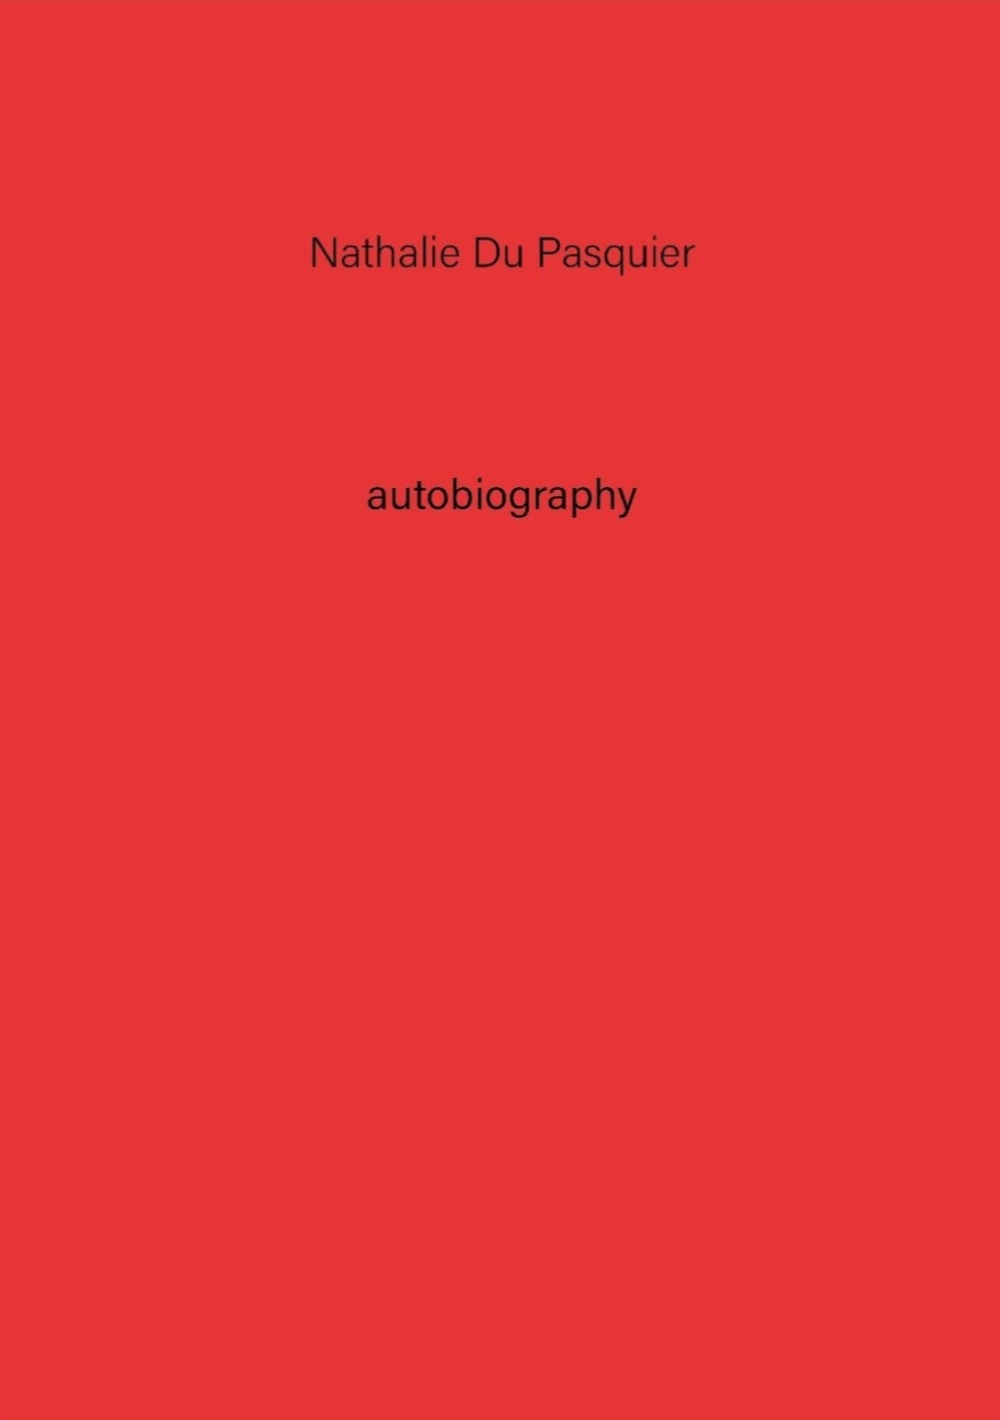 Autobiography: Nathalie Du Pasquier